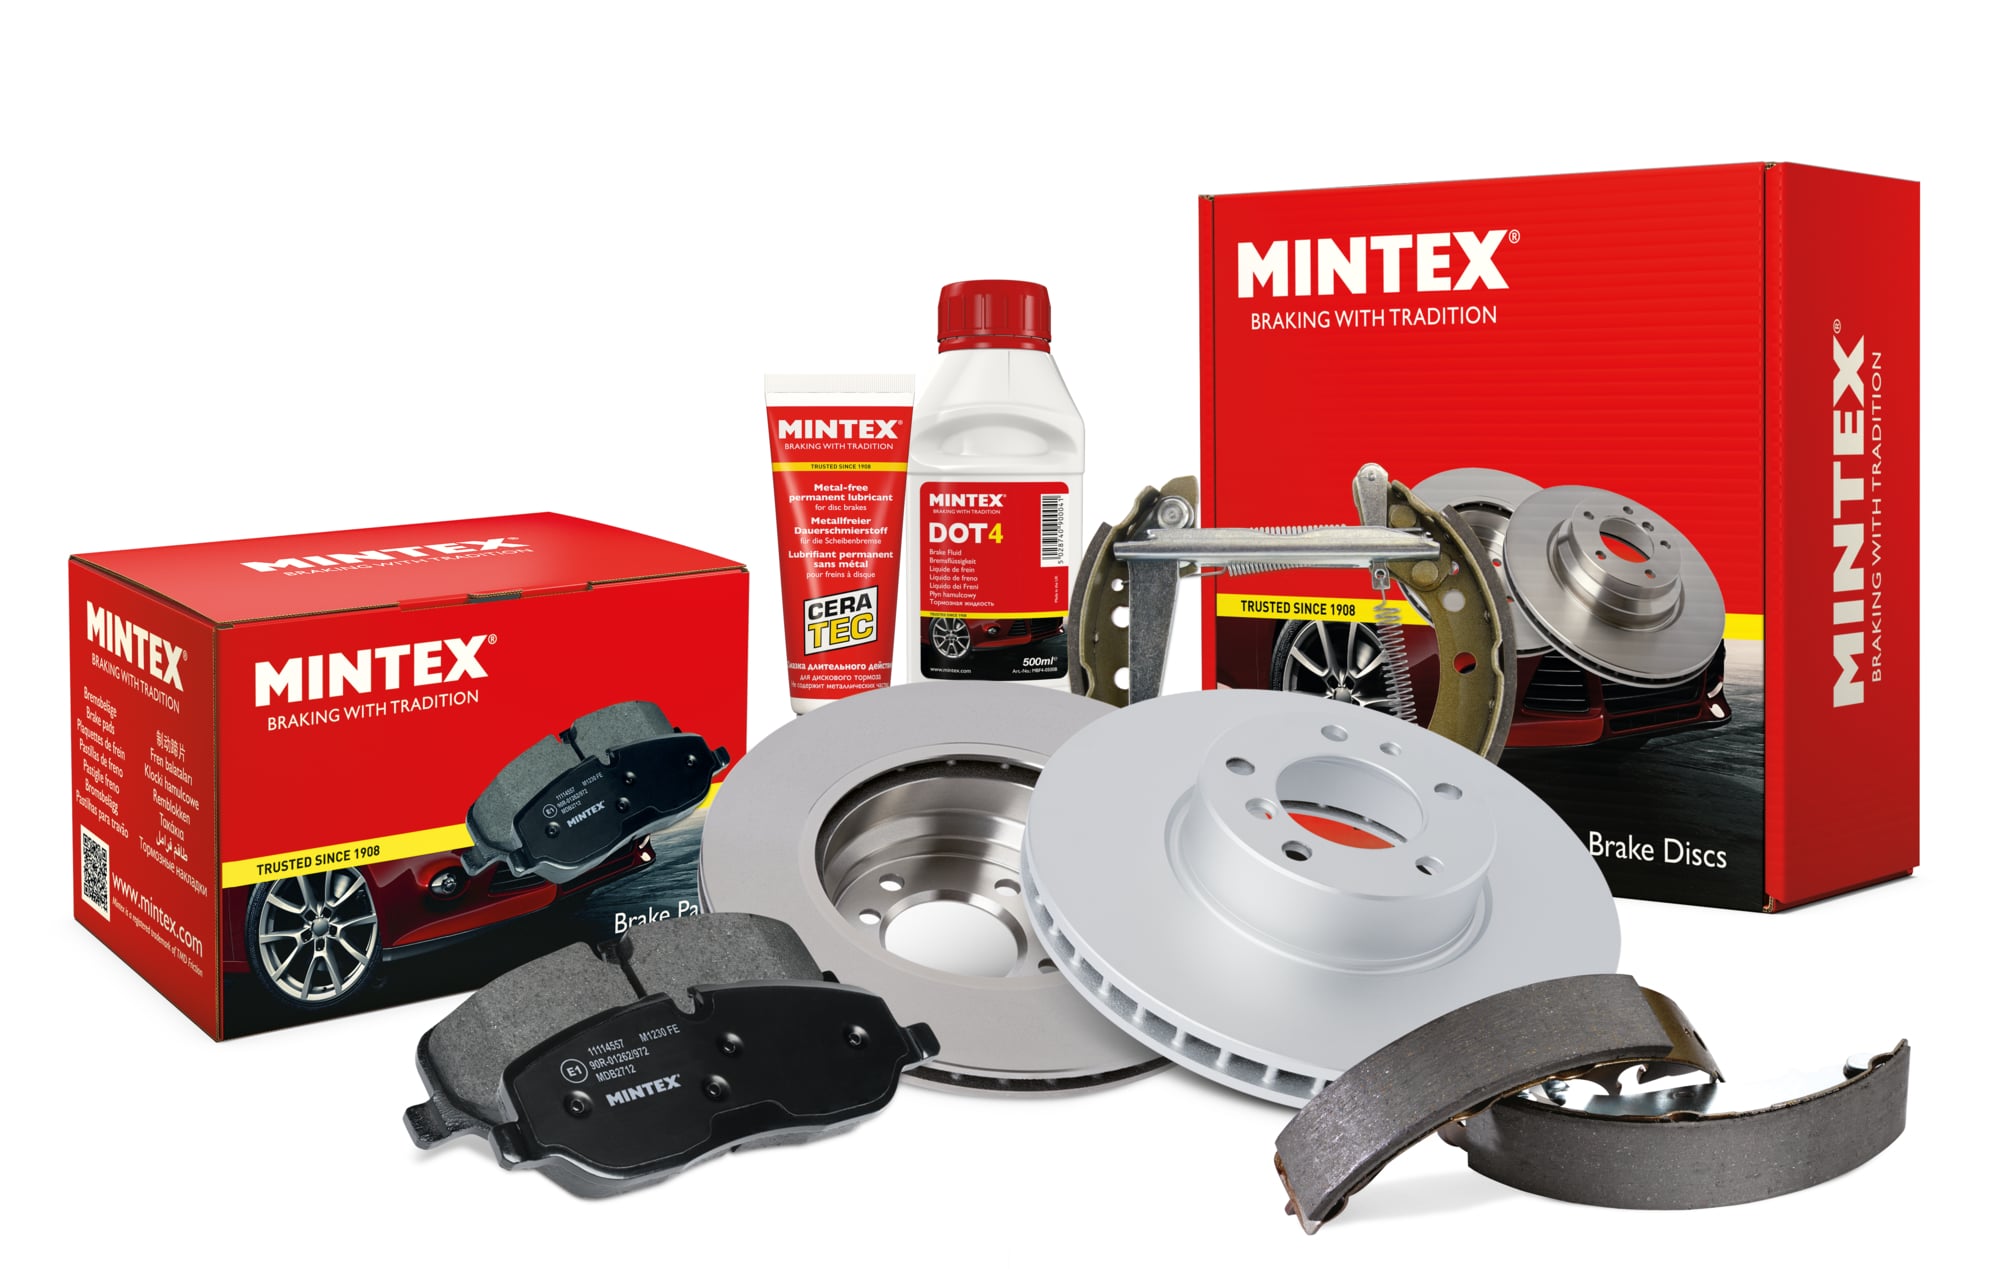 Mintex released nine new brake products